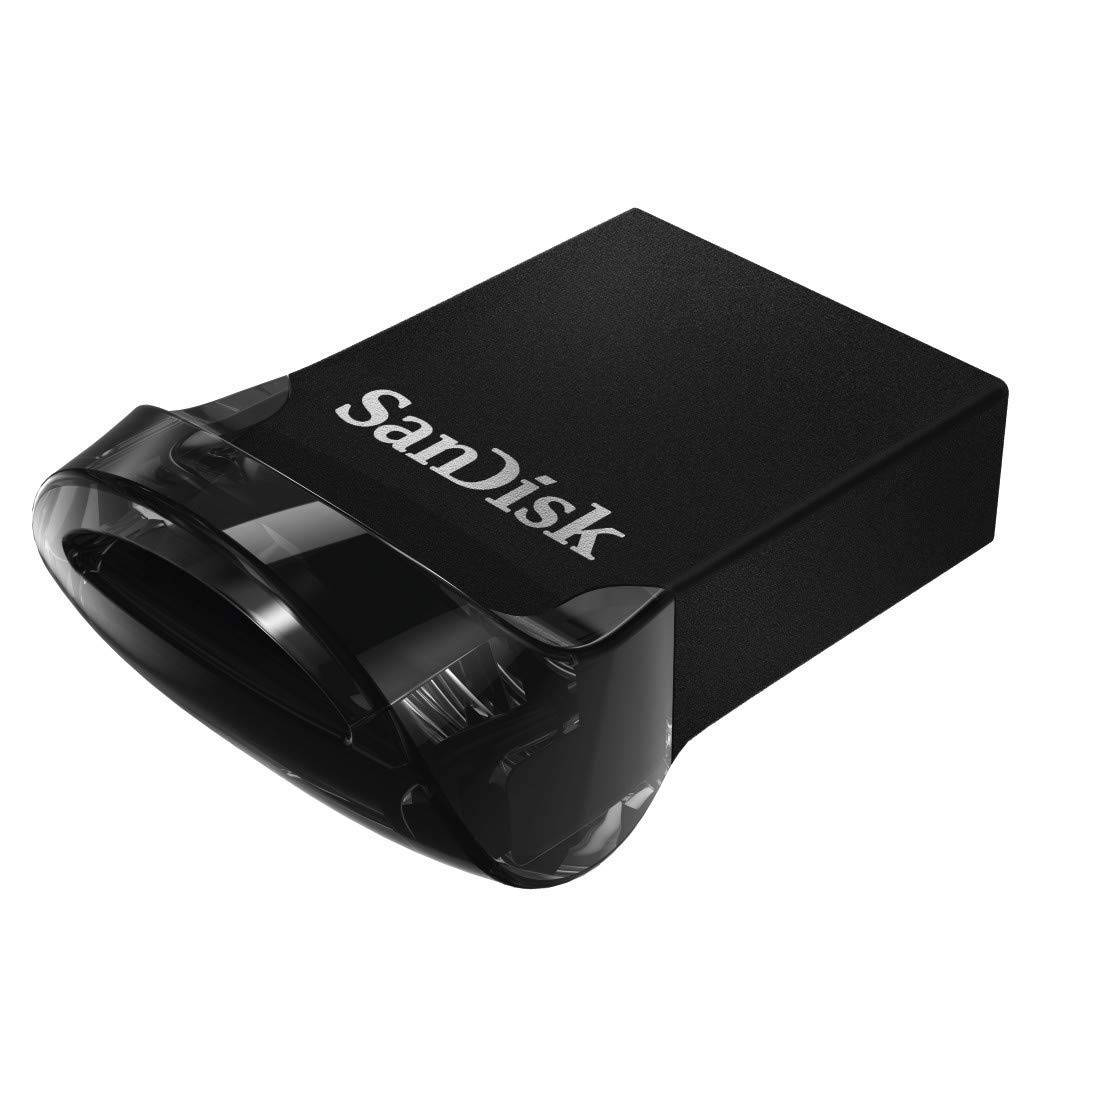 32GB USB 3.1 SanDisk solo 7,9€